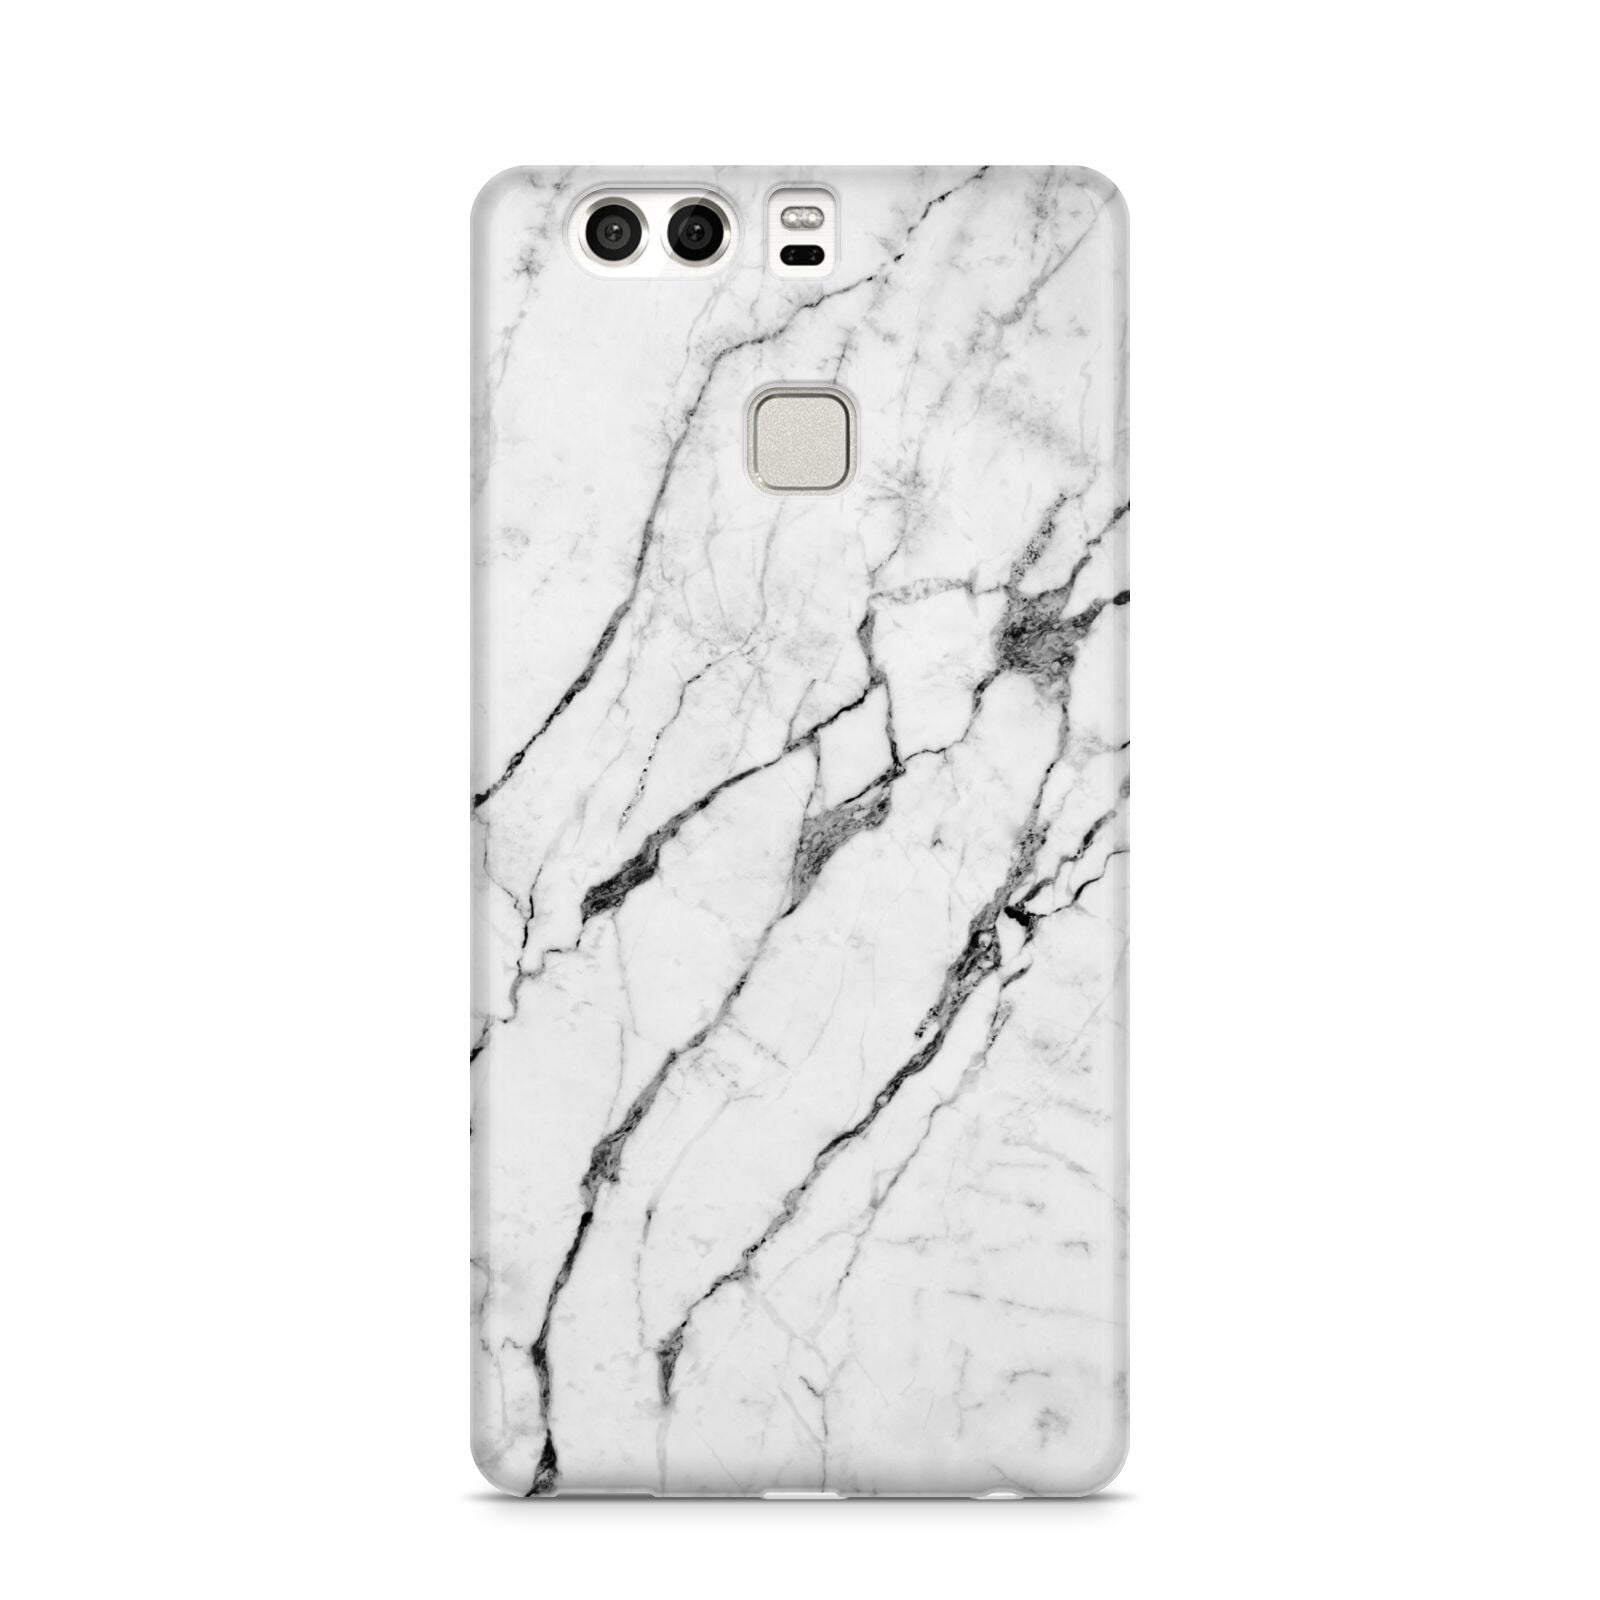 Marble White Huawei P9 Case